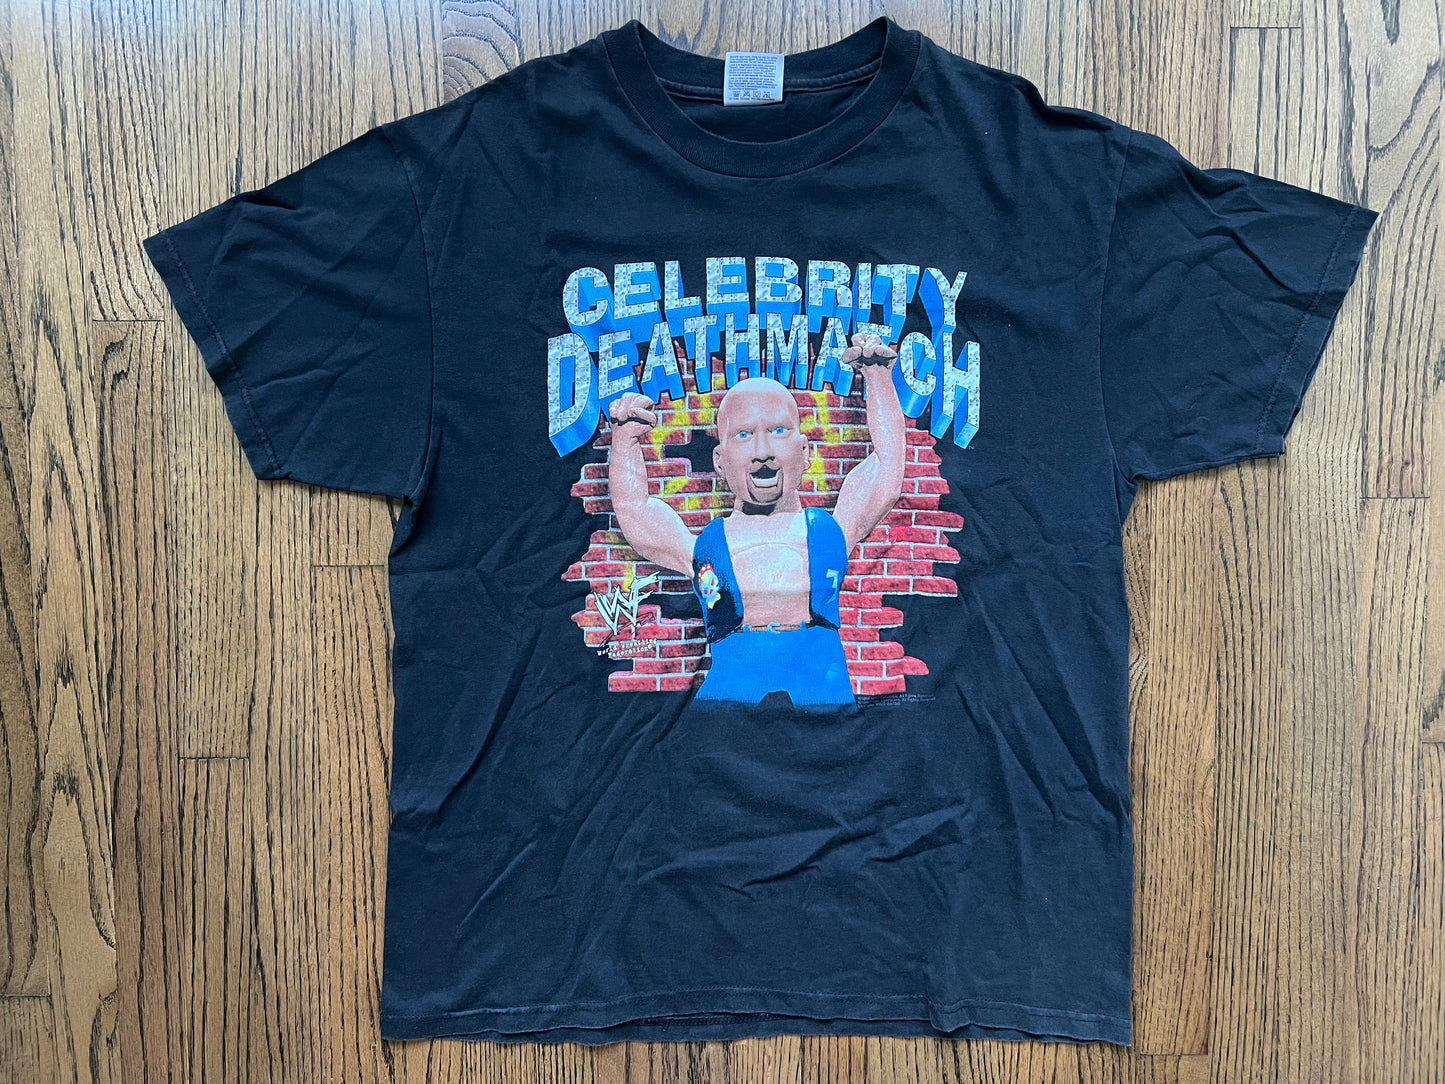 1998 WWF / MTV “Stone Cold” Steve Austin Celebrity Death Match shirt